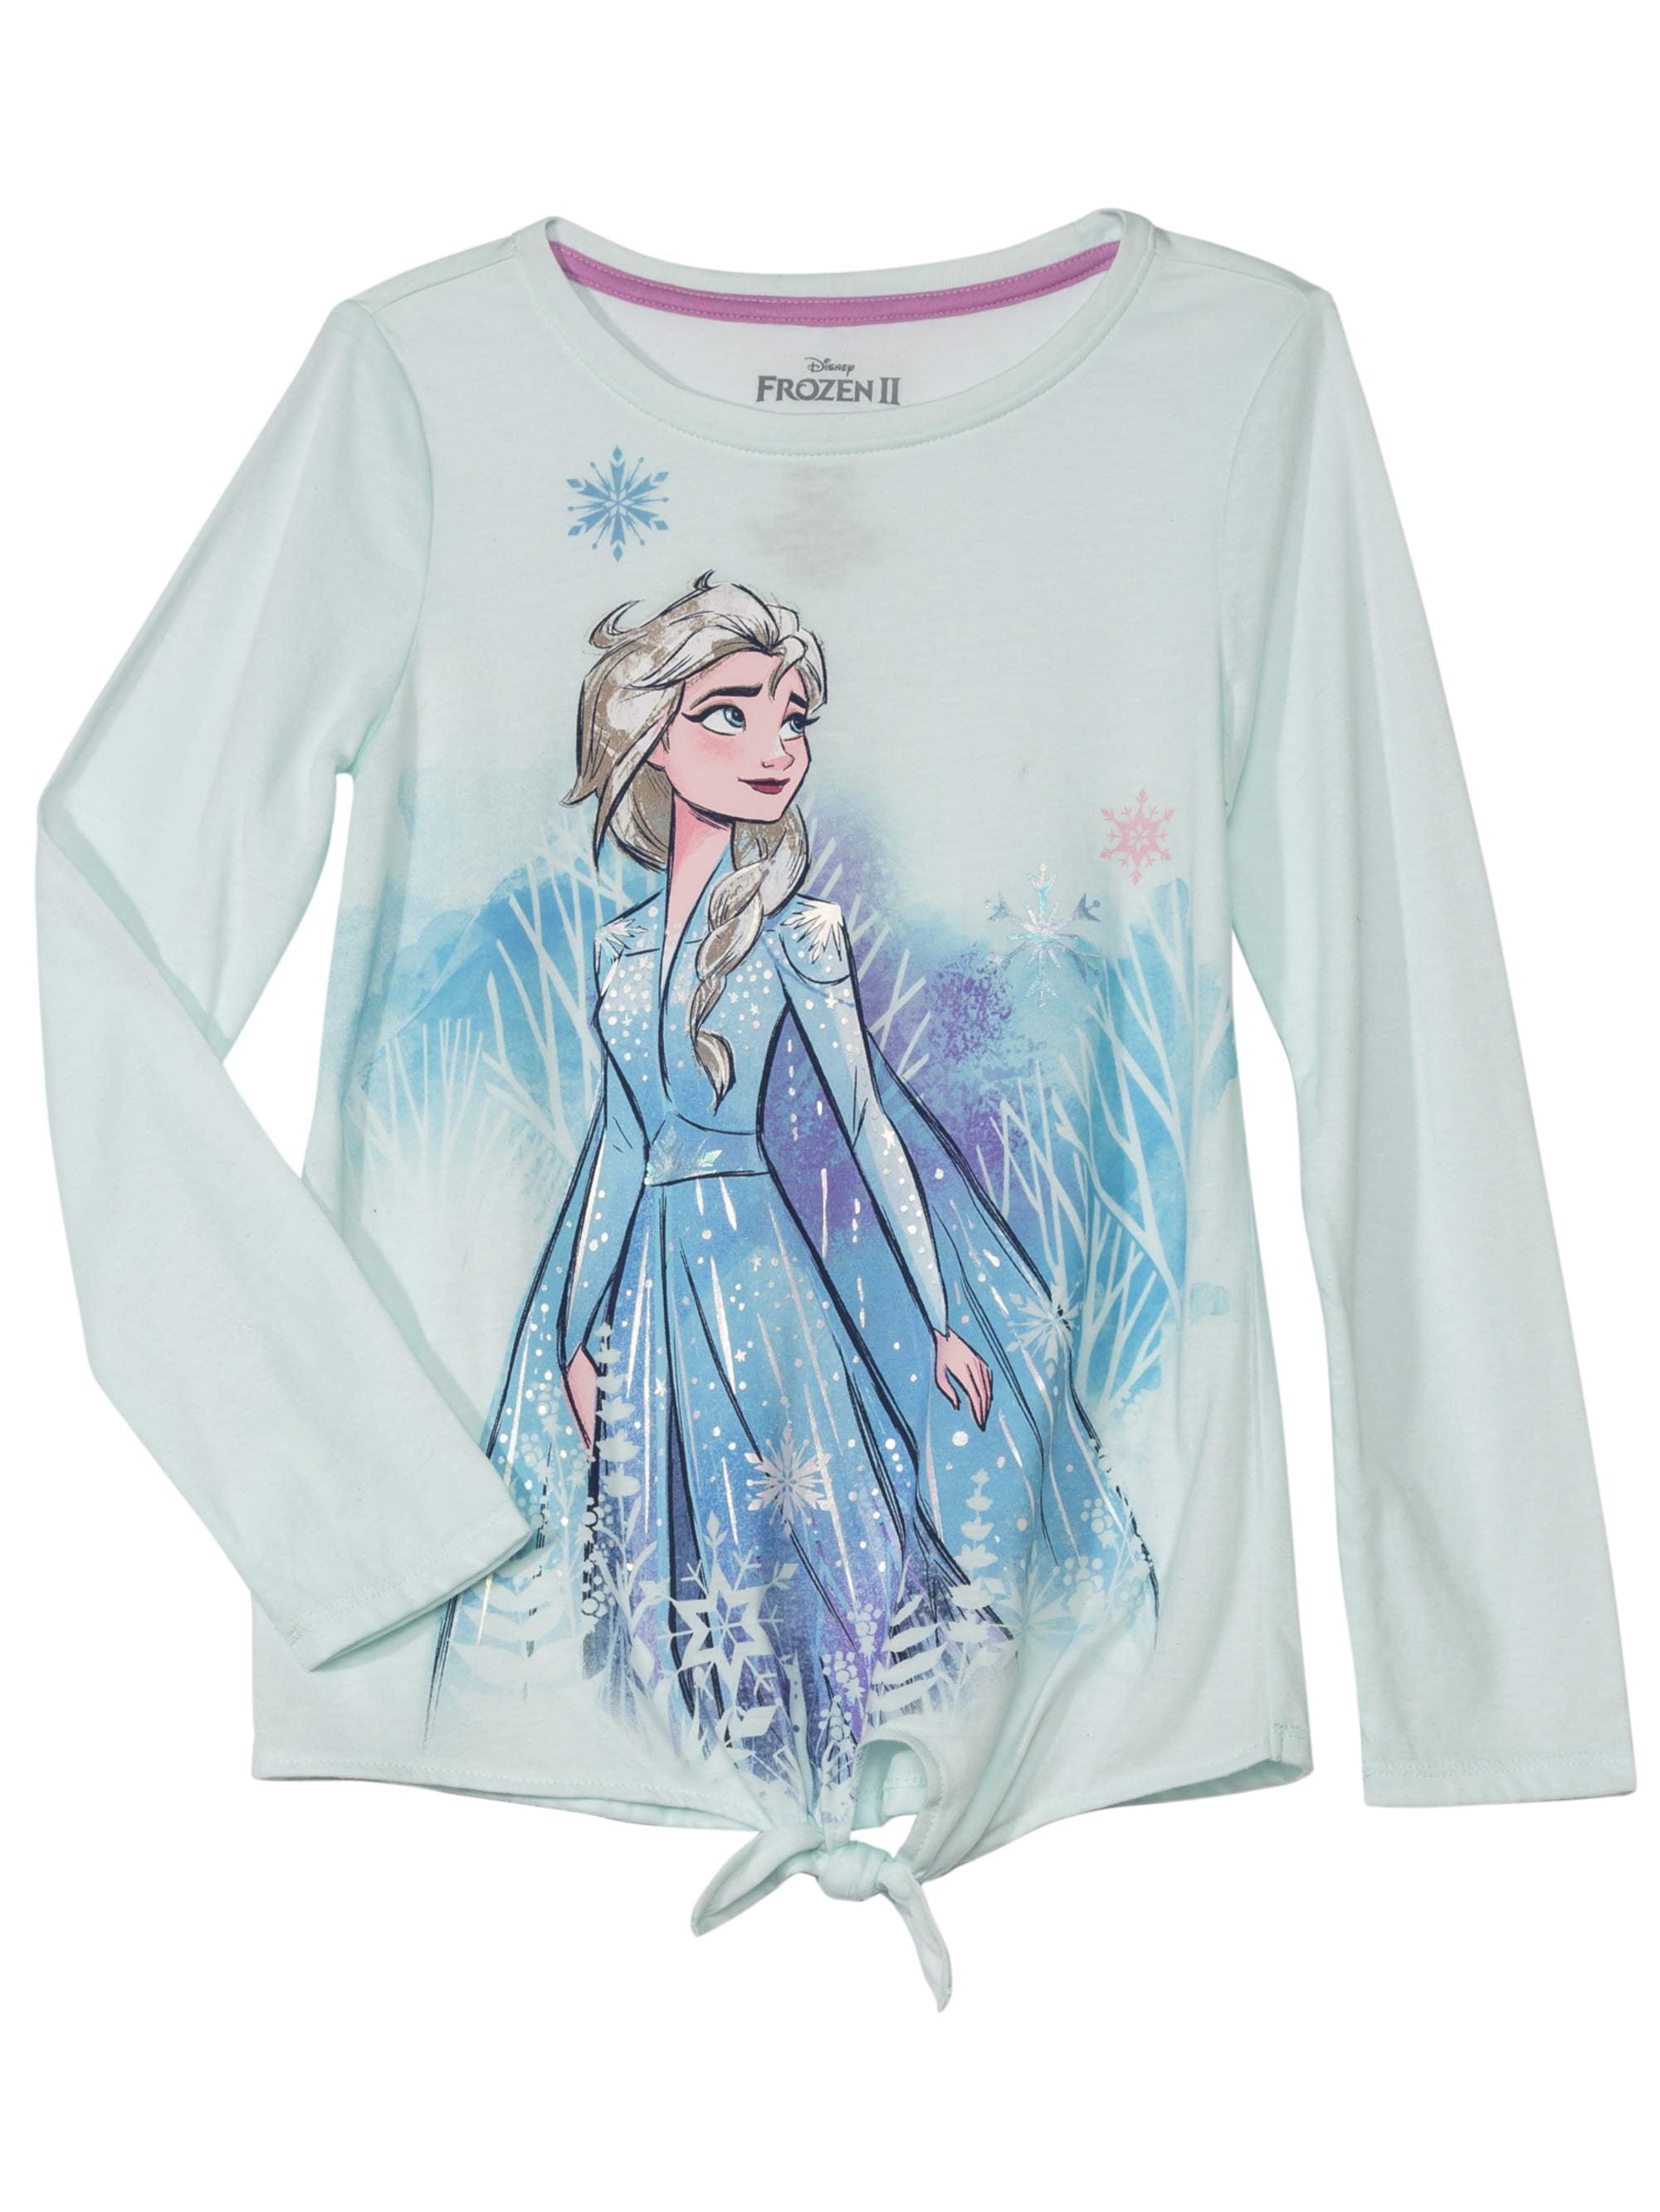 Disney Frozen ELSA  Puff Long Sleeve CHARCOAL Graphic Tee T-Shirt Top For Girls 